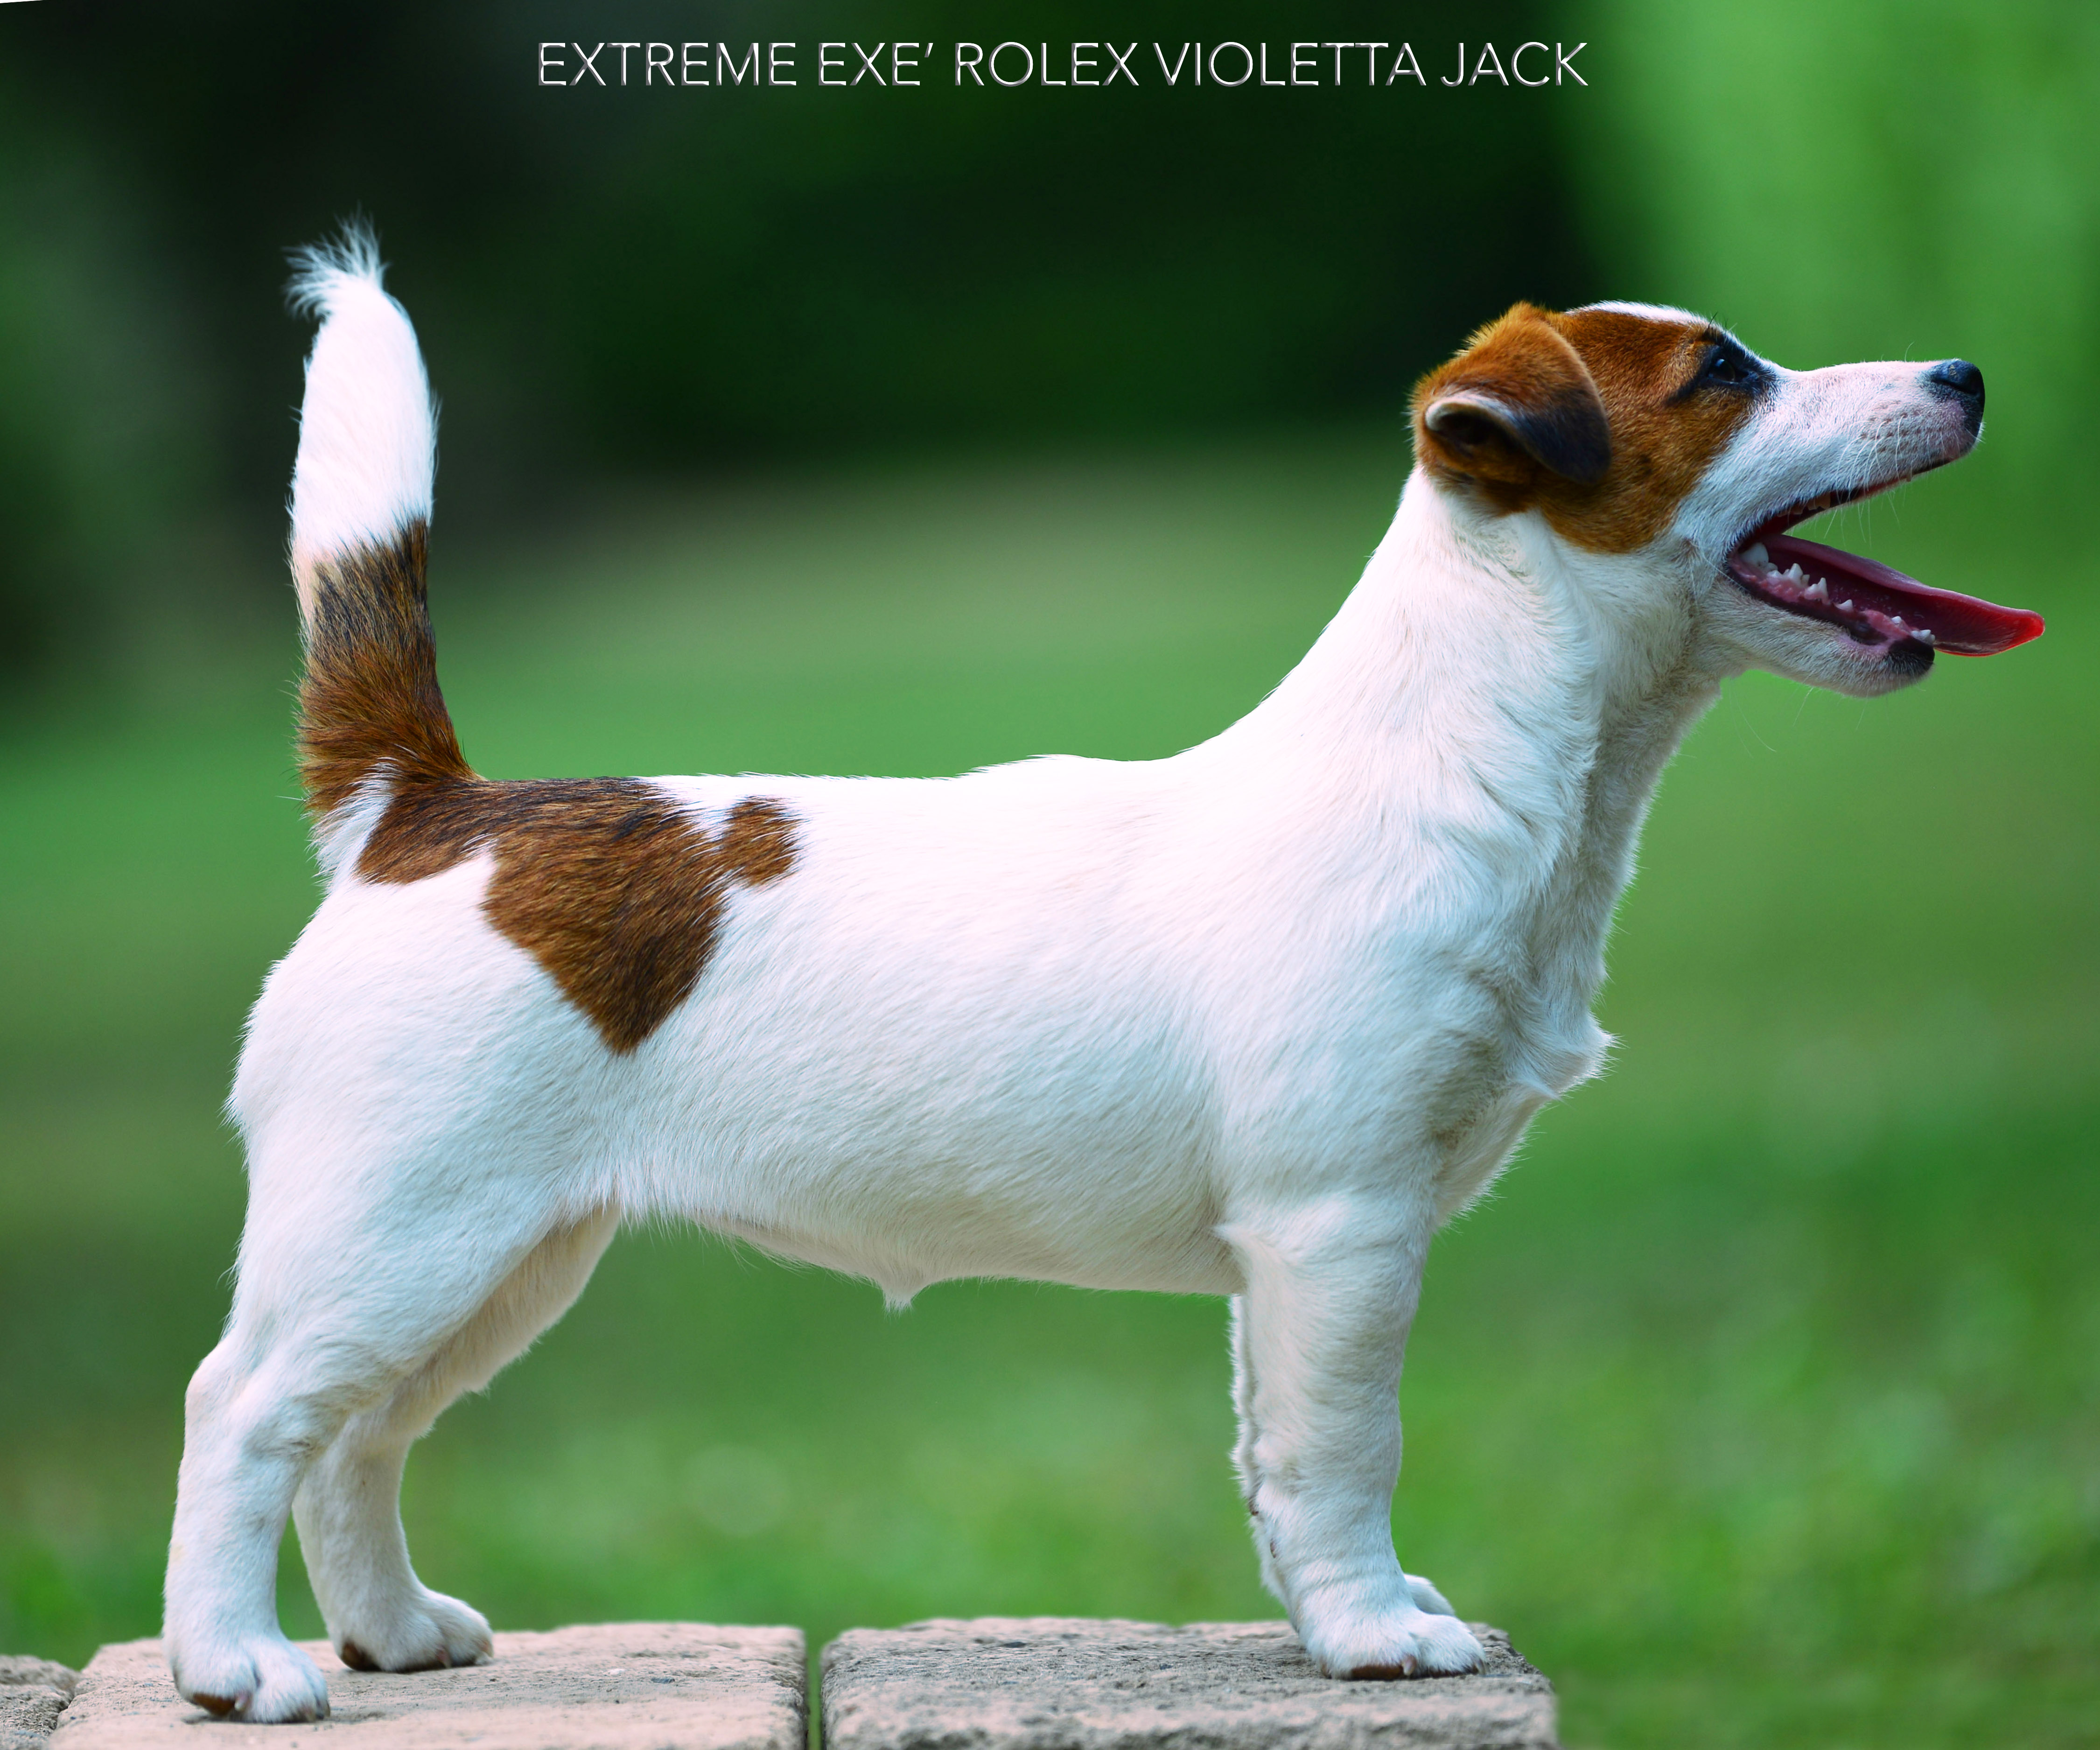  Extreme Exé Rolex Violetta Jack